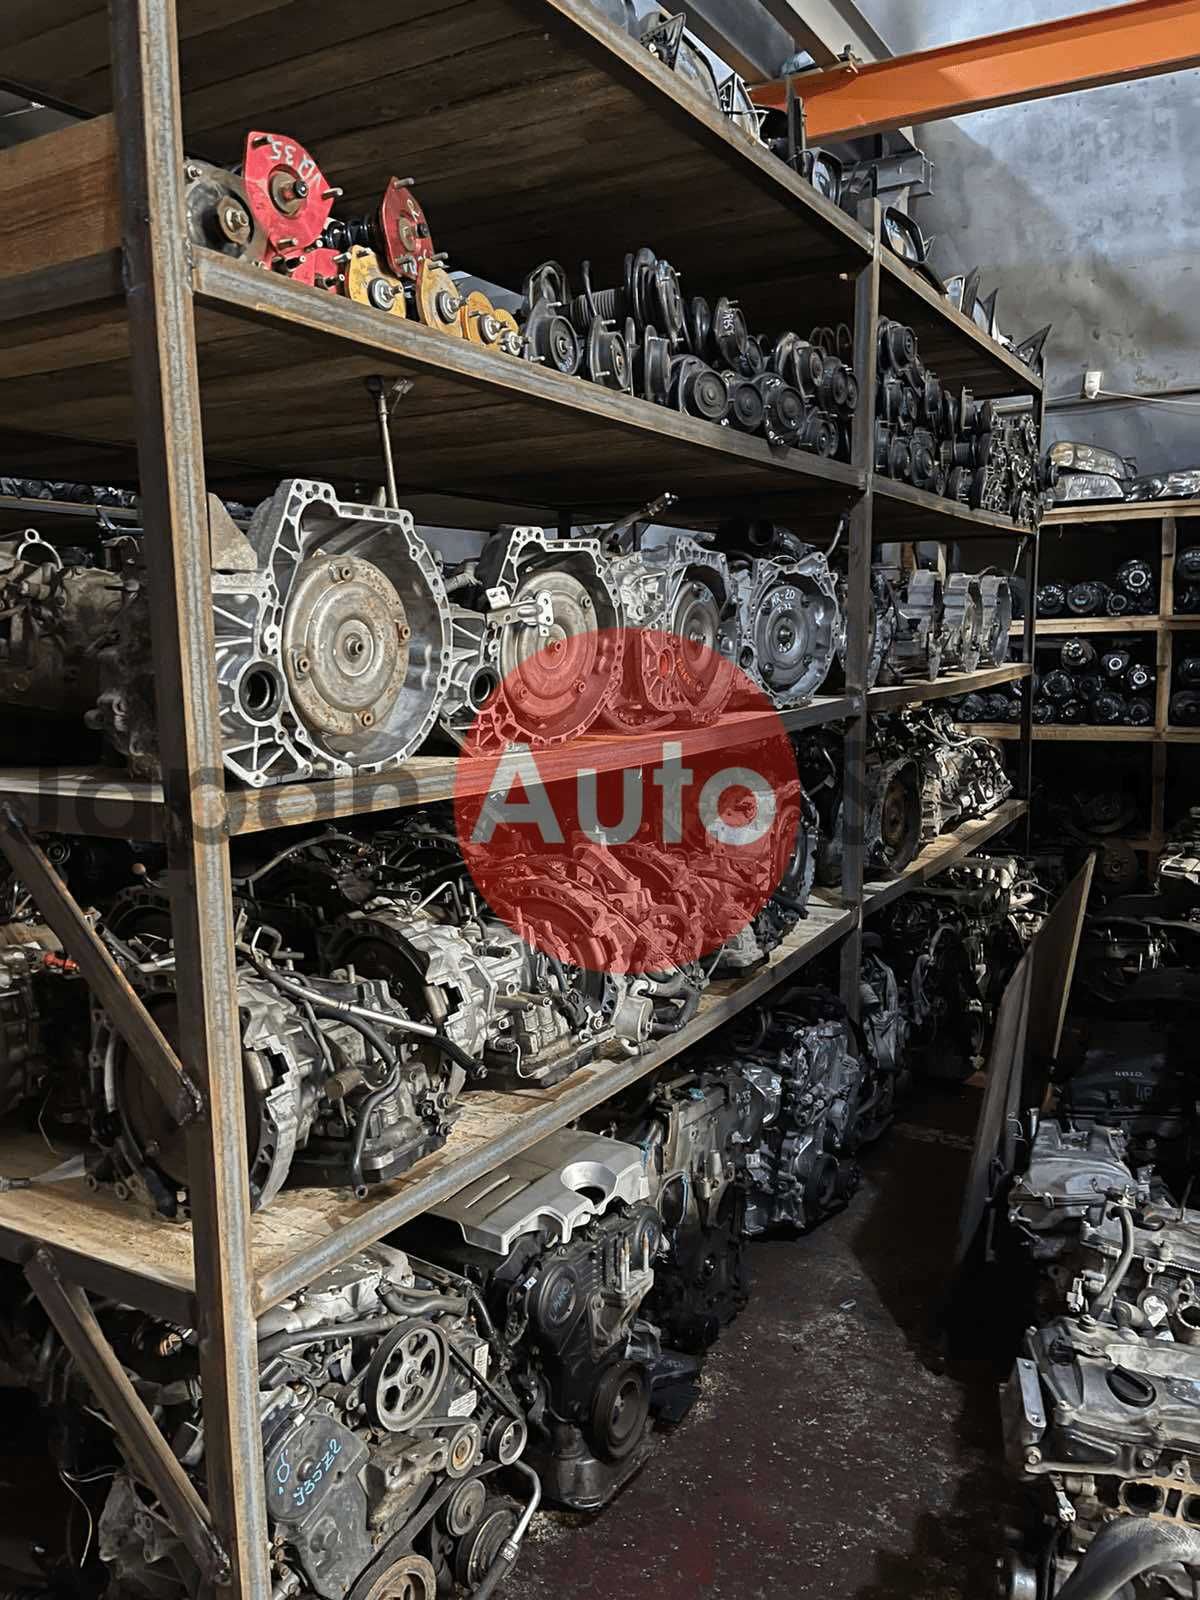 Двигатель Volkswagen Tiguan, Passat, Jetta, объём 2.0 Турбо, 2011-2017